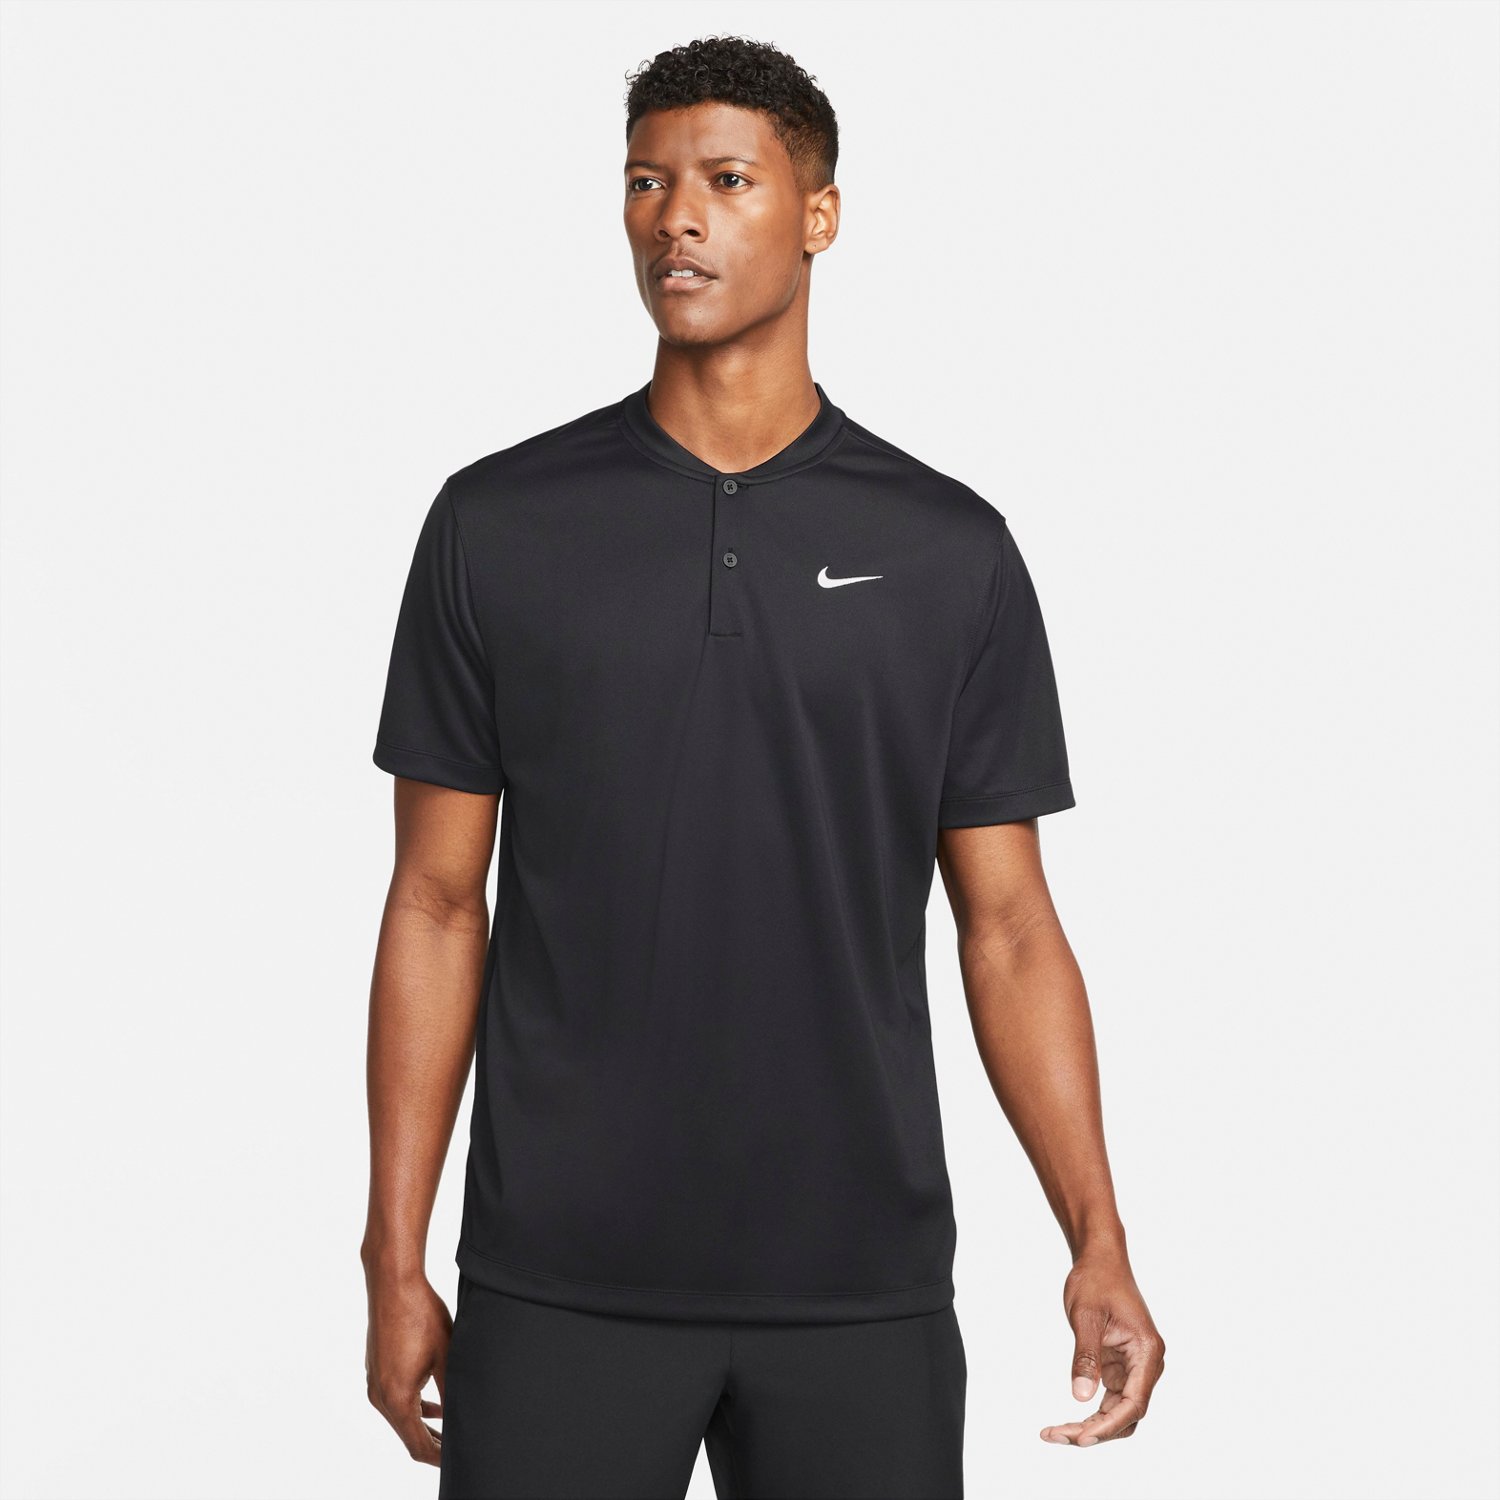 Buy Nike Court Victory Dry T-Shirt Men White online